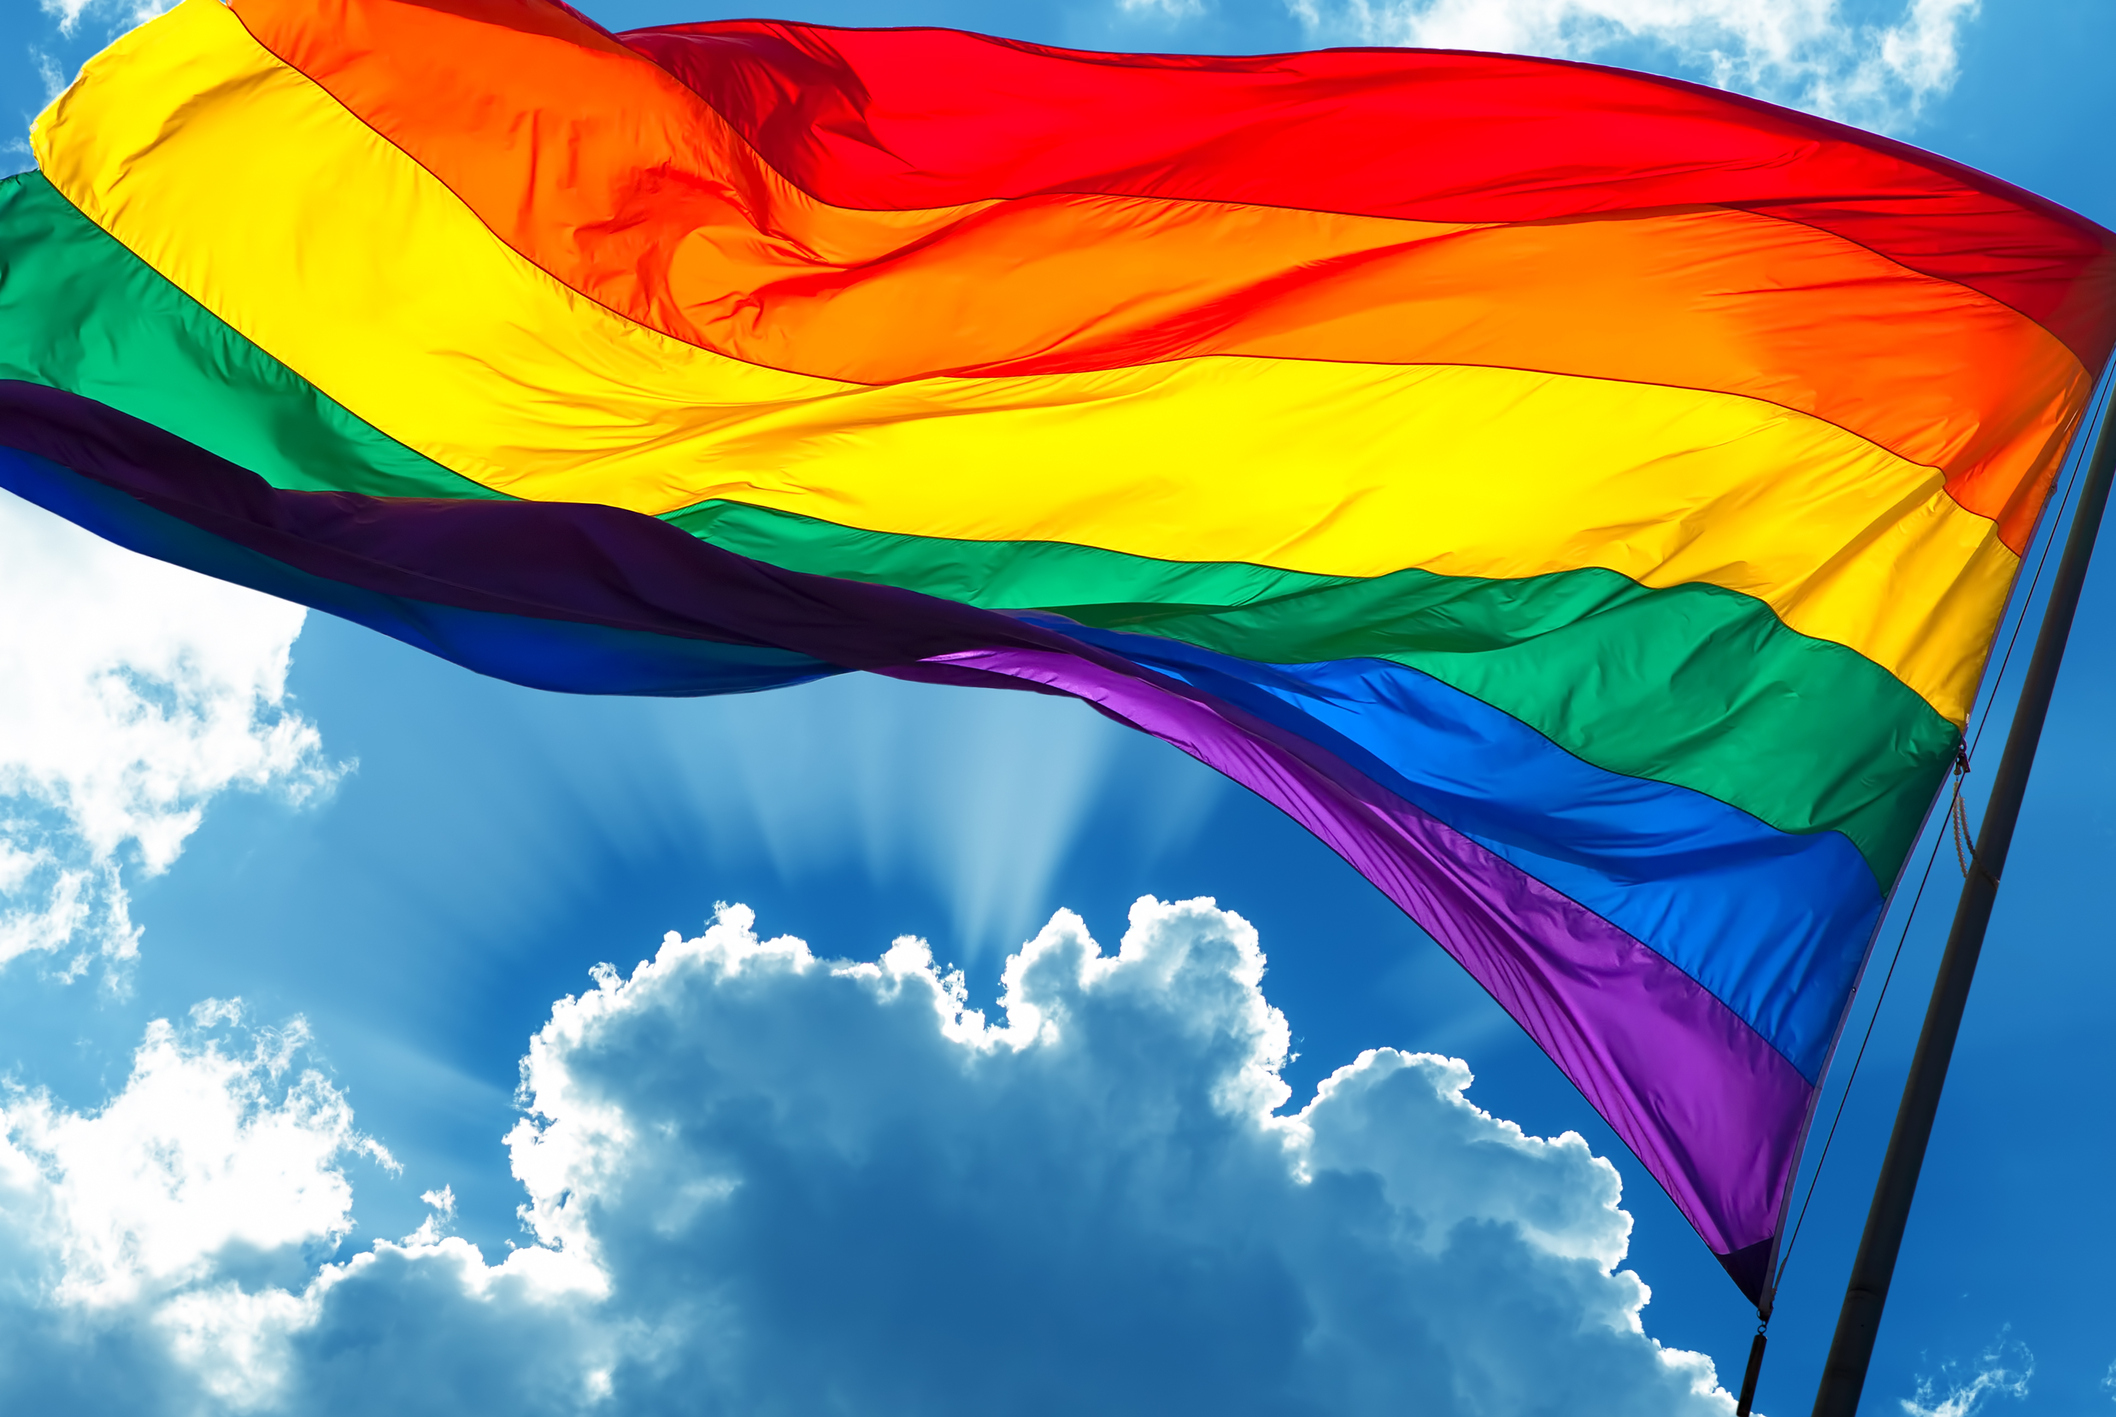 The seventh annual Baton Rouge Pride Festival takes place June 16